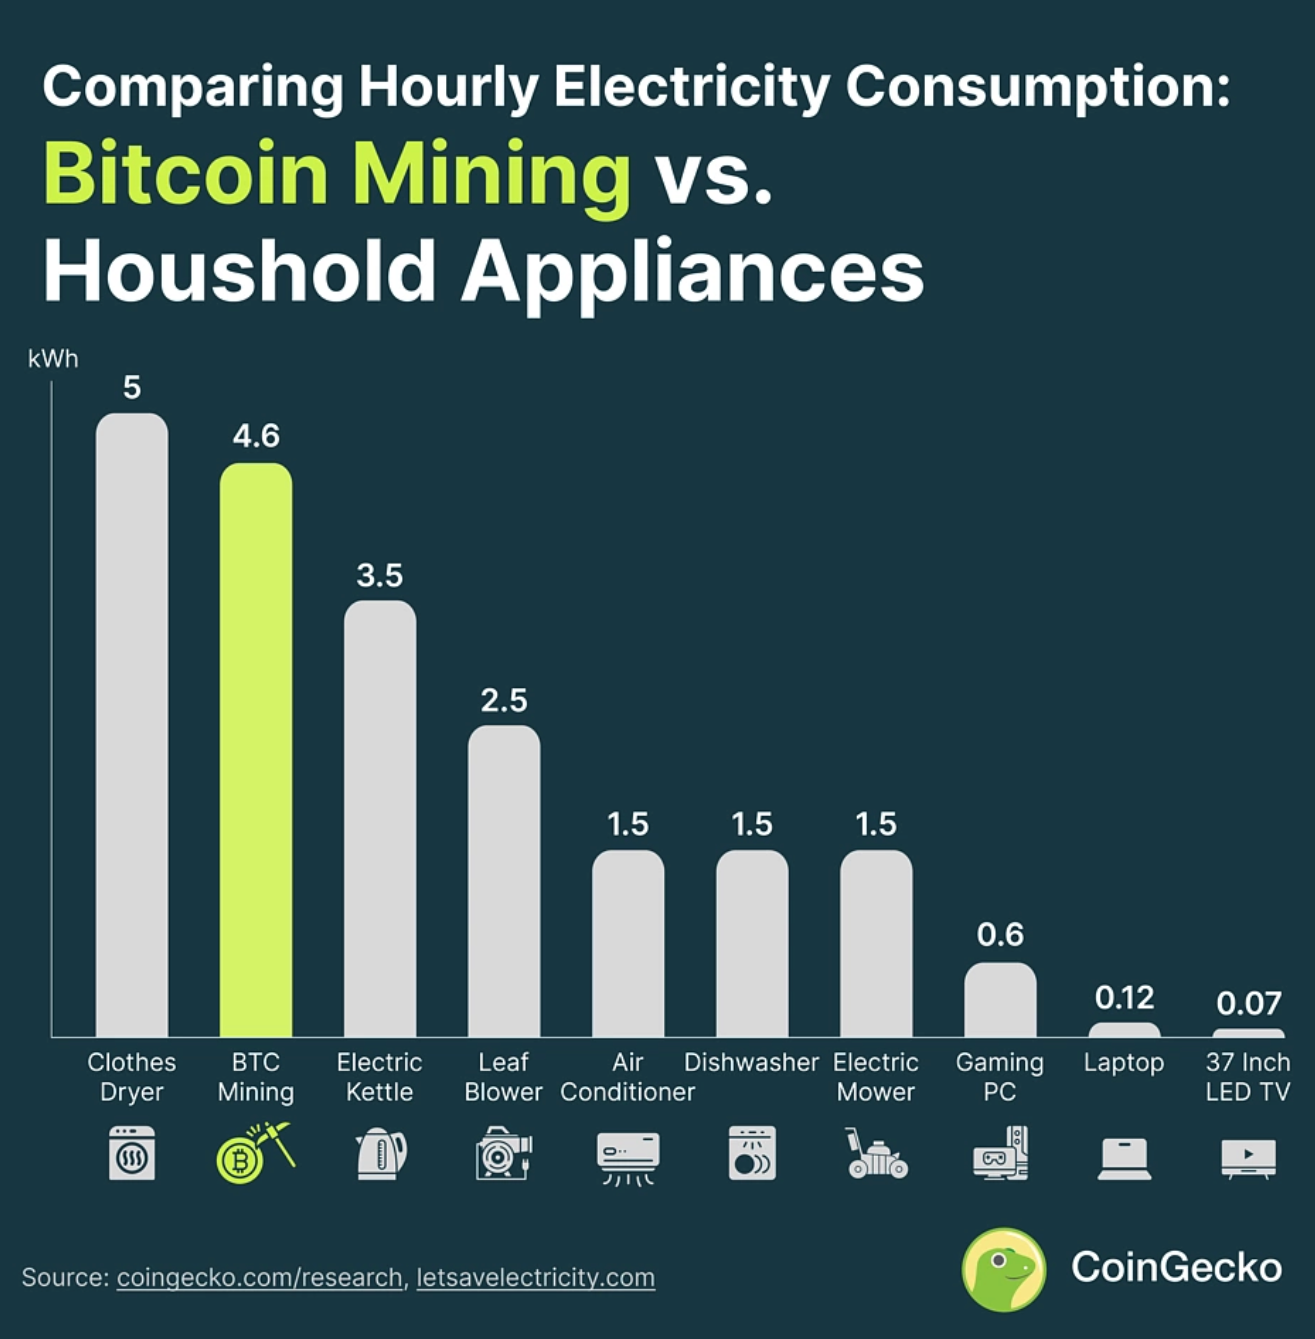 Bitcoin mining (home appliances vs. electricity consumption of Bitcoin mining)